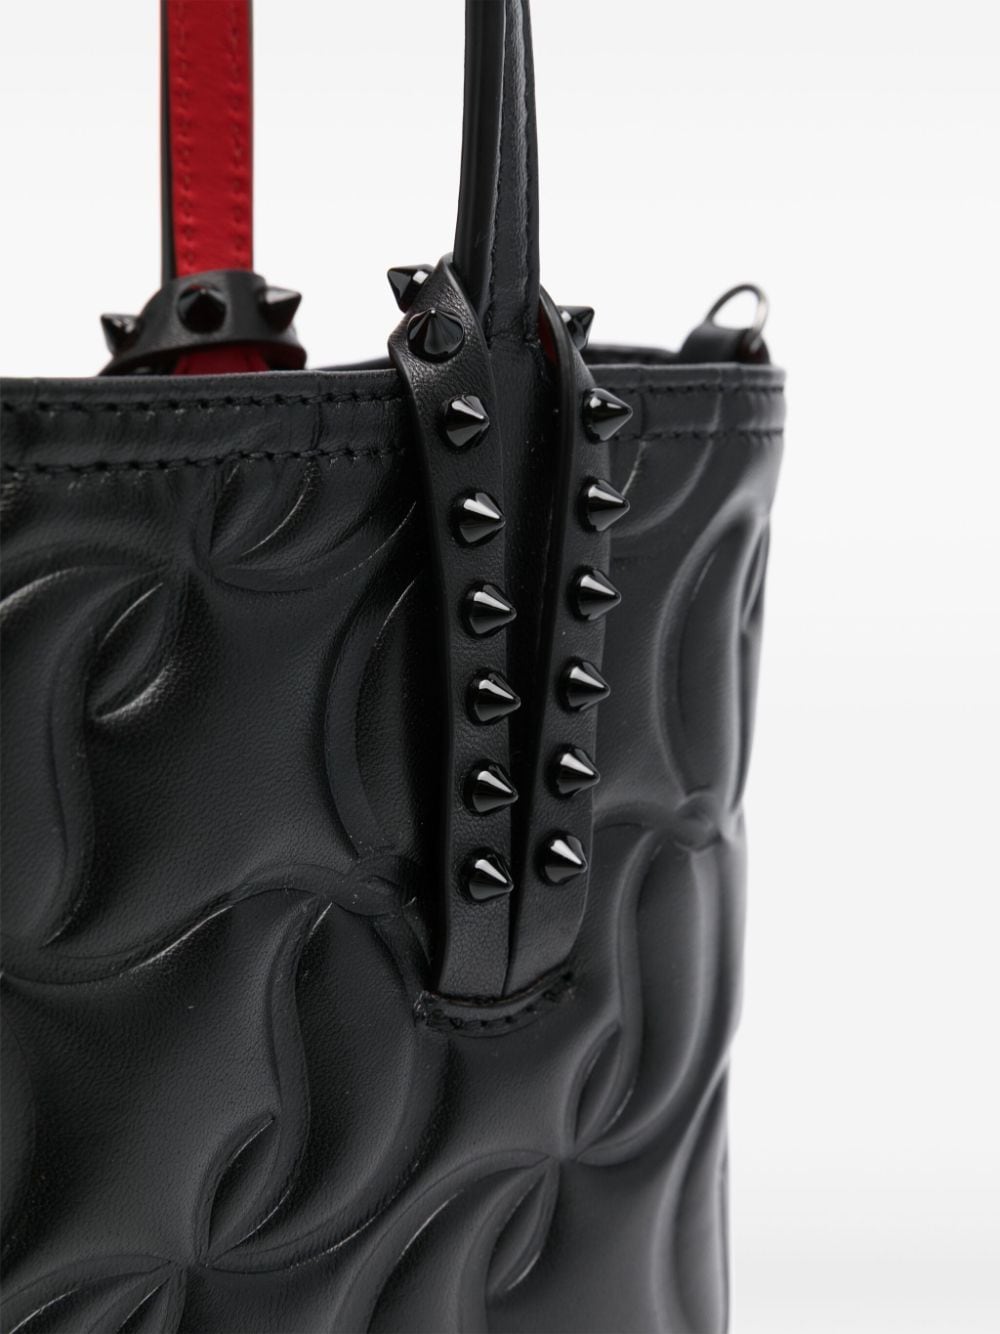 CHRISTIAN LOUBOUTIN Black Nappa Leather Debossed Monogram Handbag with Spike Stud Detailing